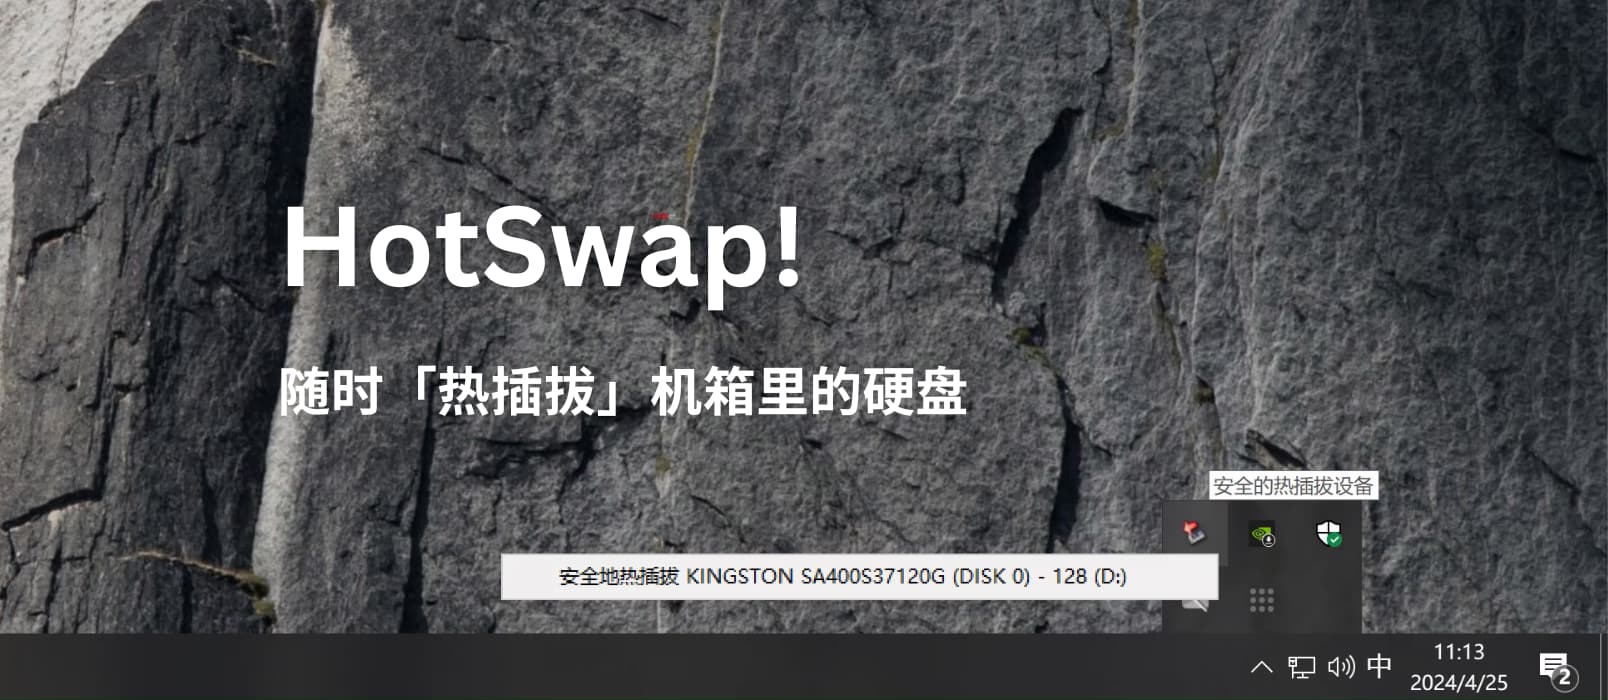 HotSwap! - 给硬盘加个软件开关，随时「拔掉机箱里的硬盘」[Windows] 29